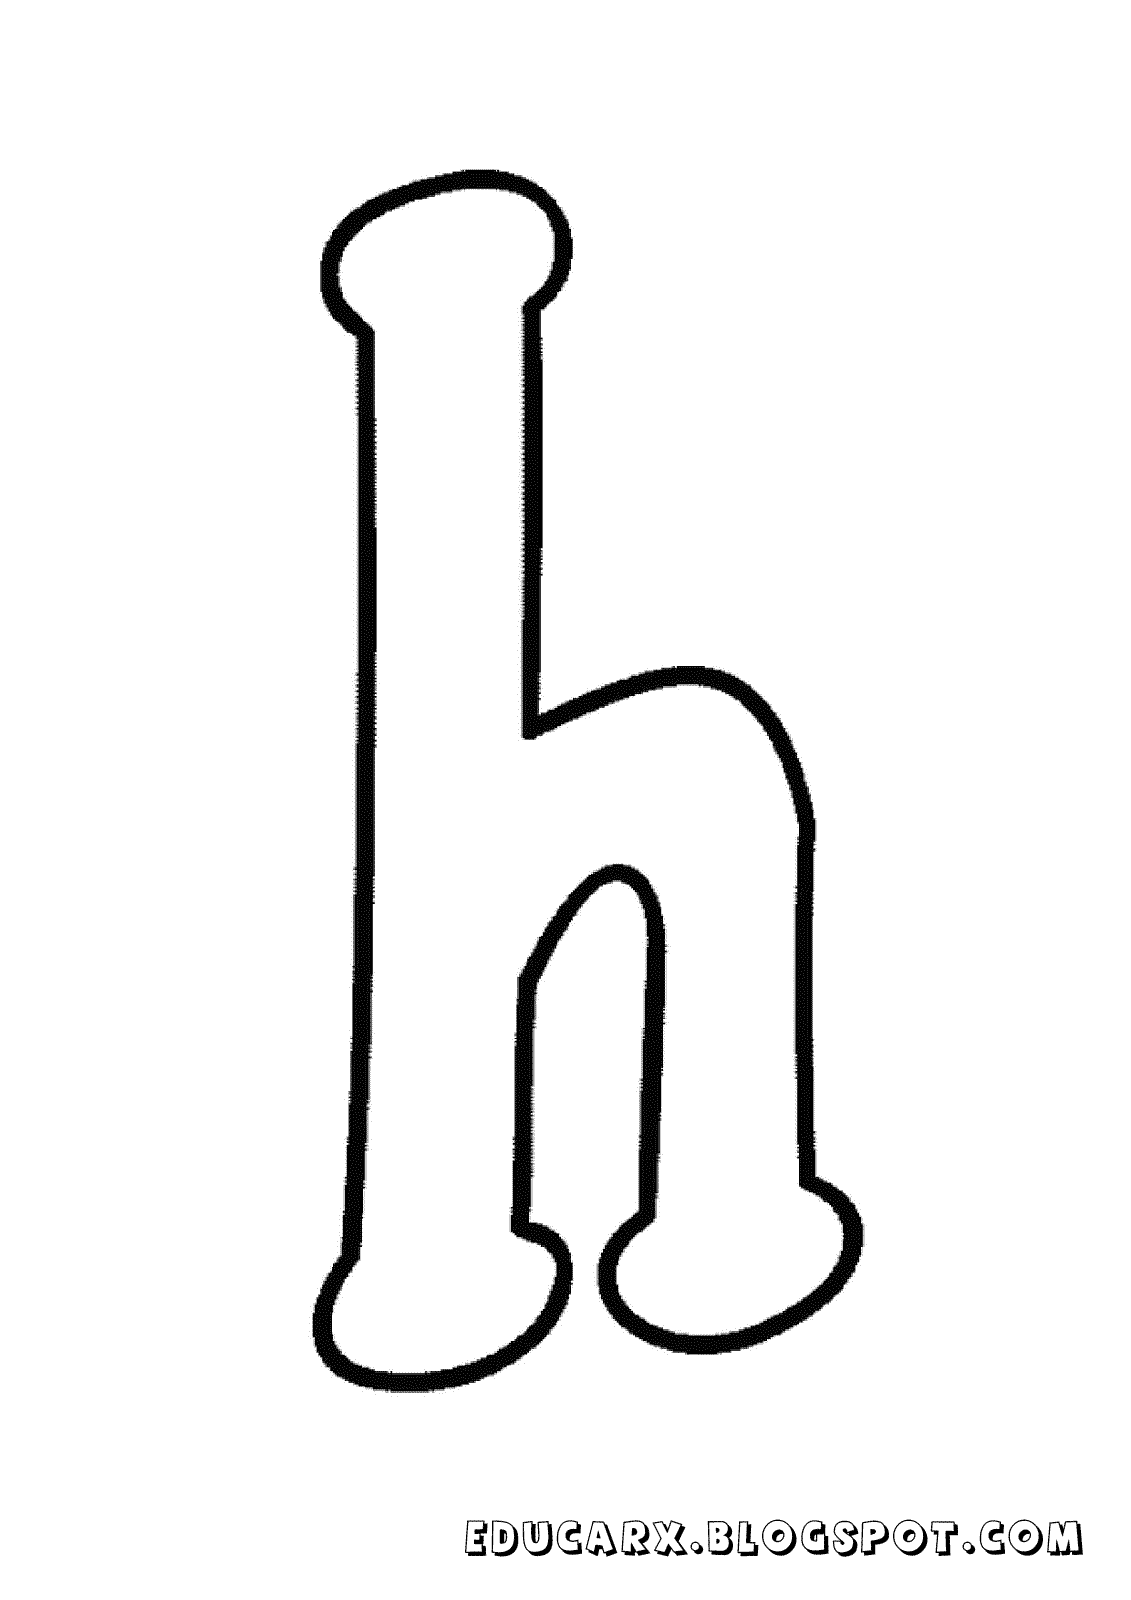 Molde da letra minuscula h